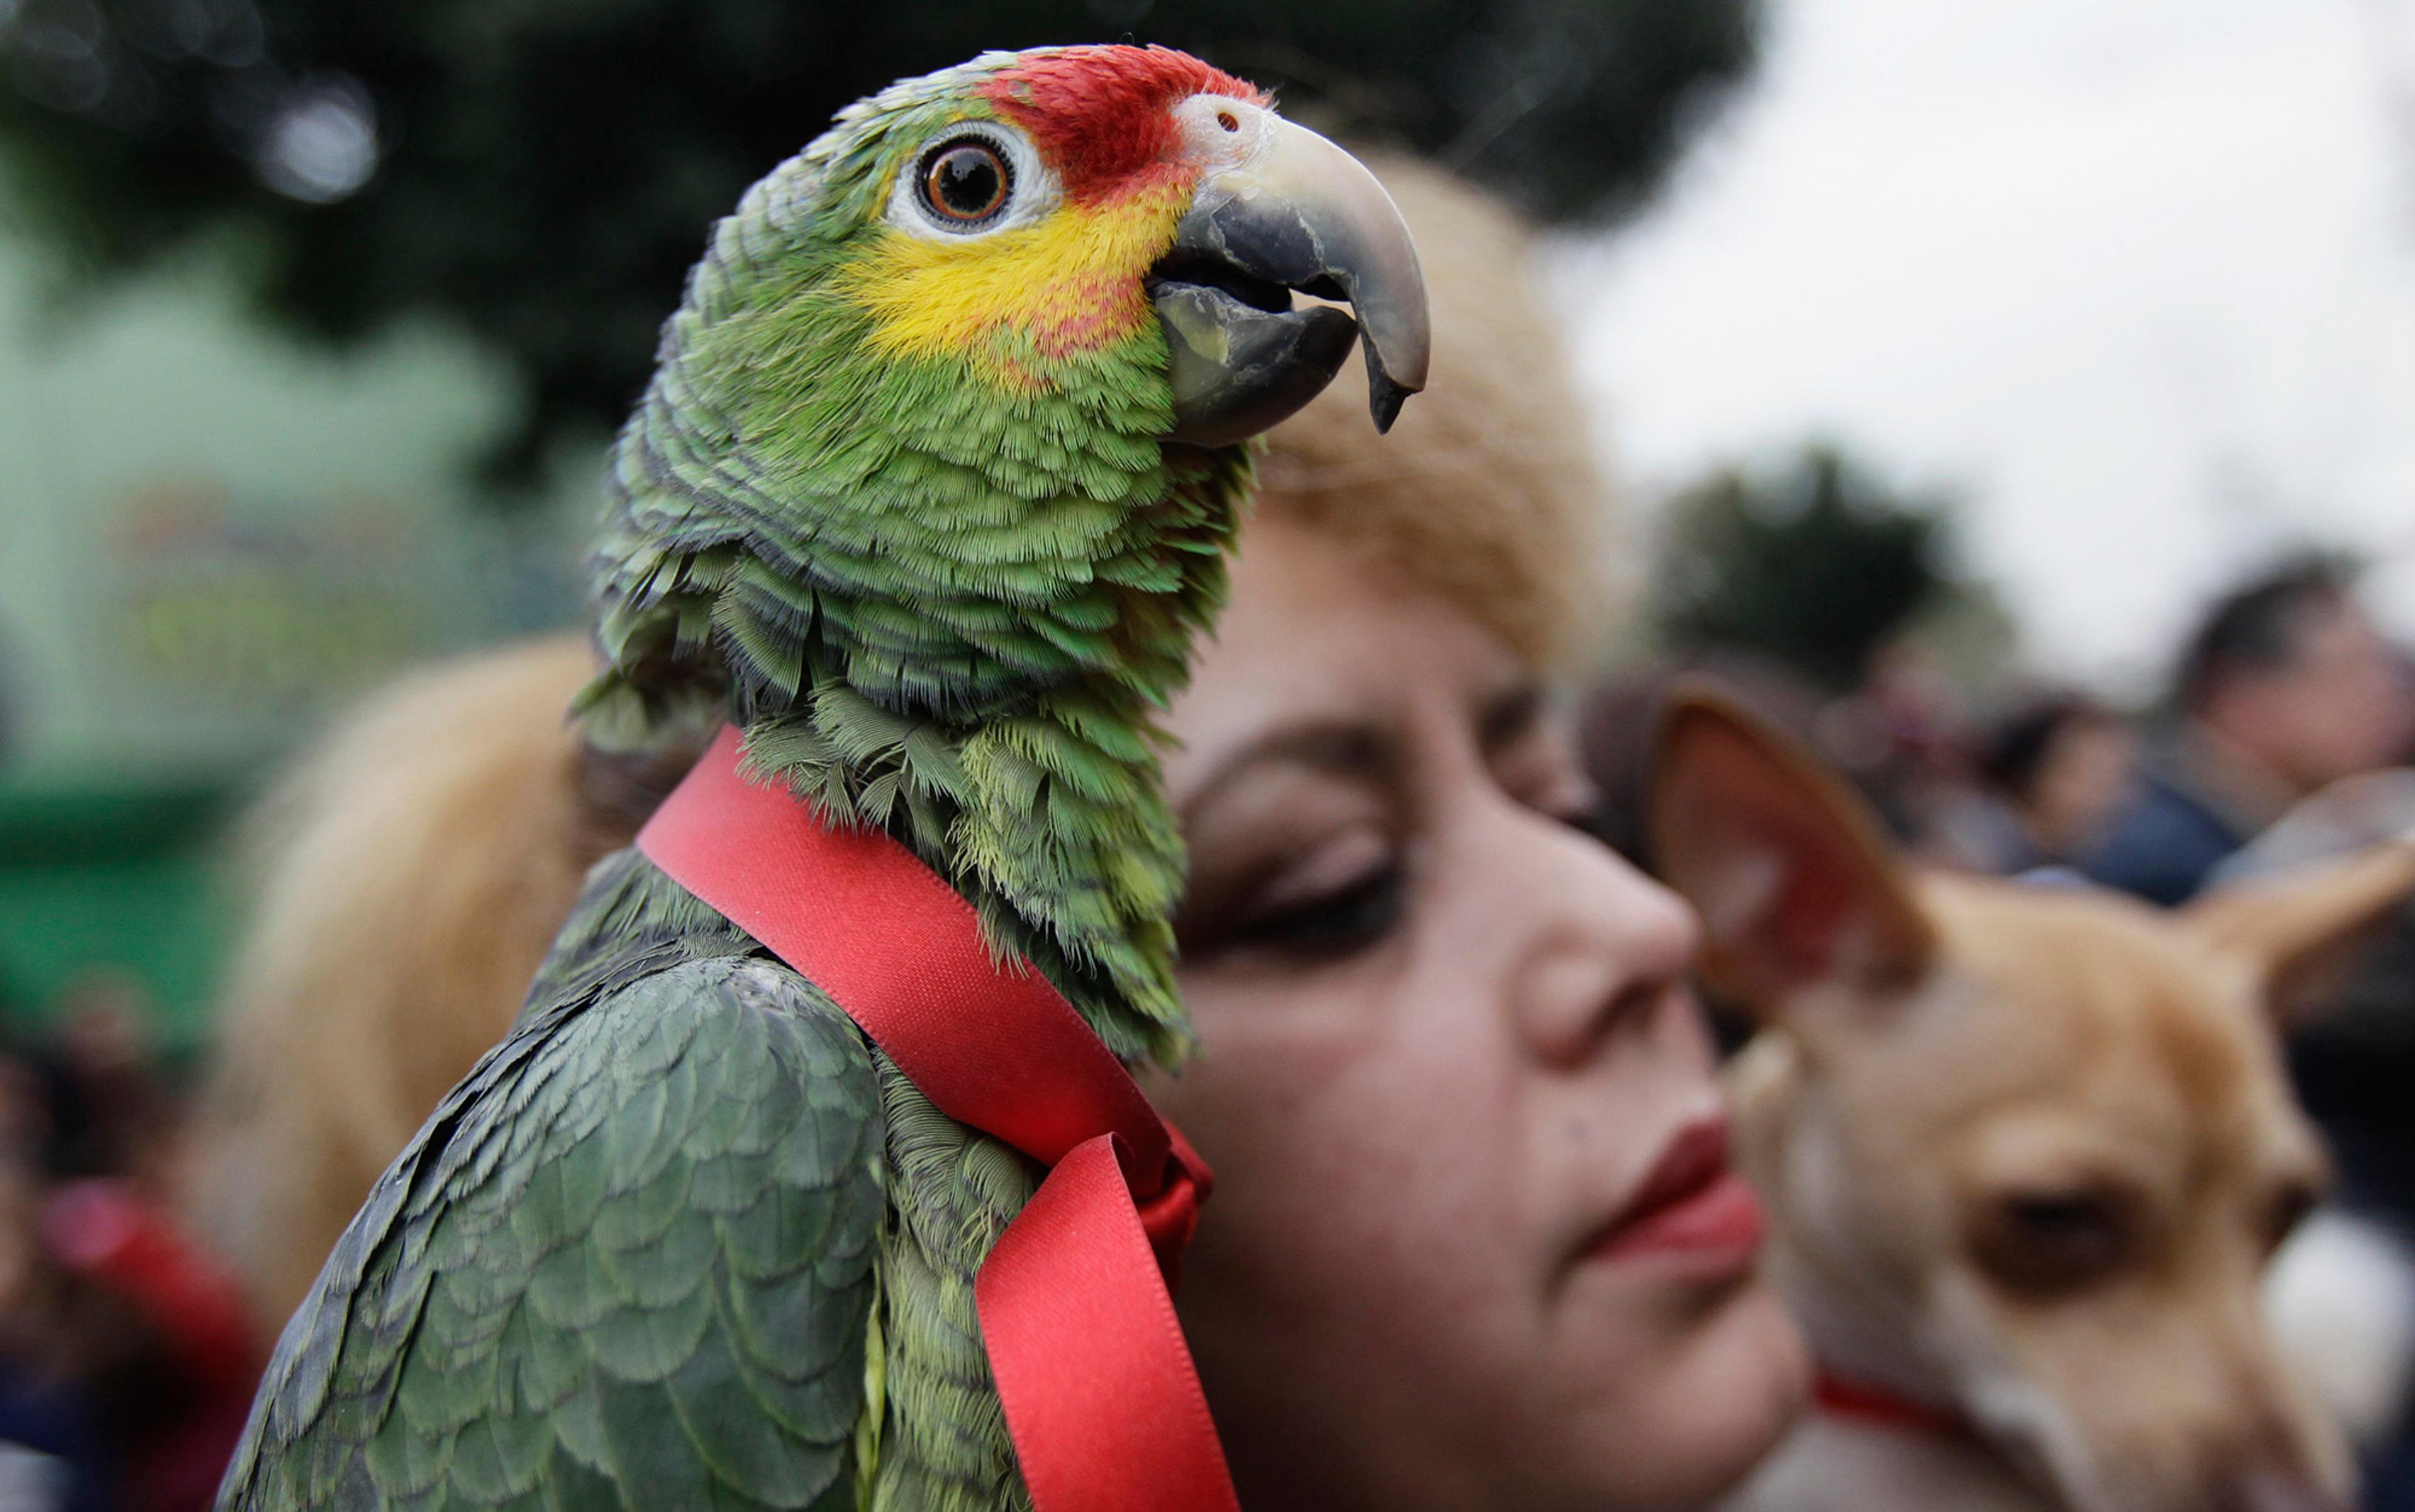 What Makes Parrots So Intelligent?